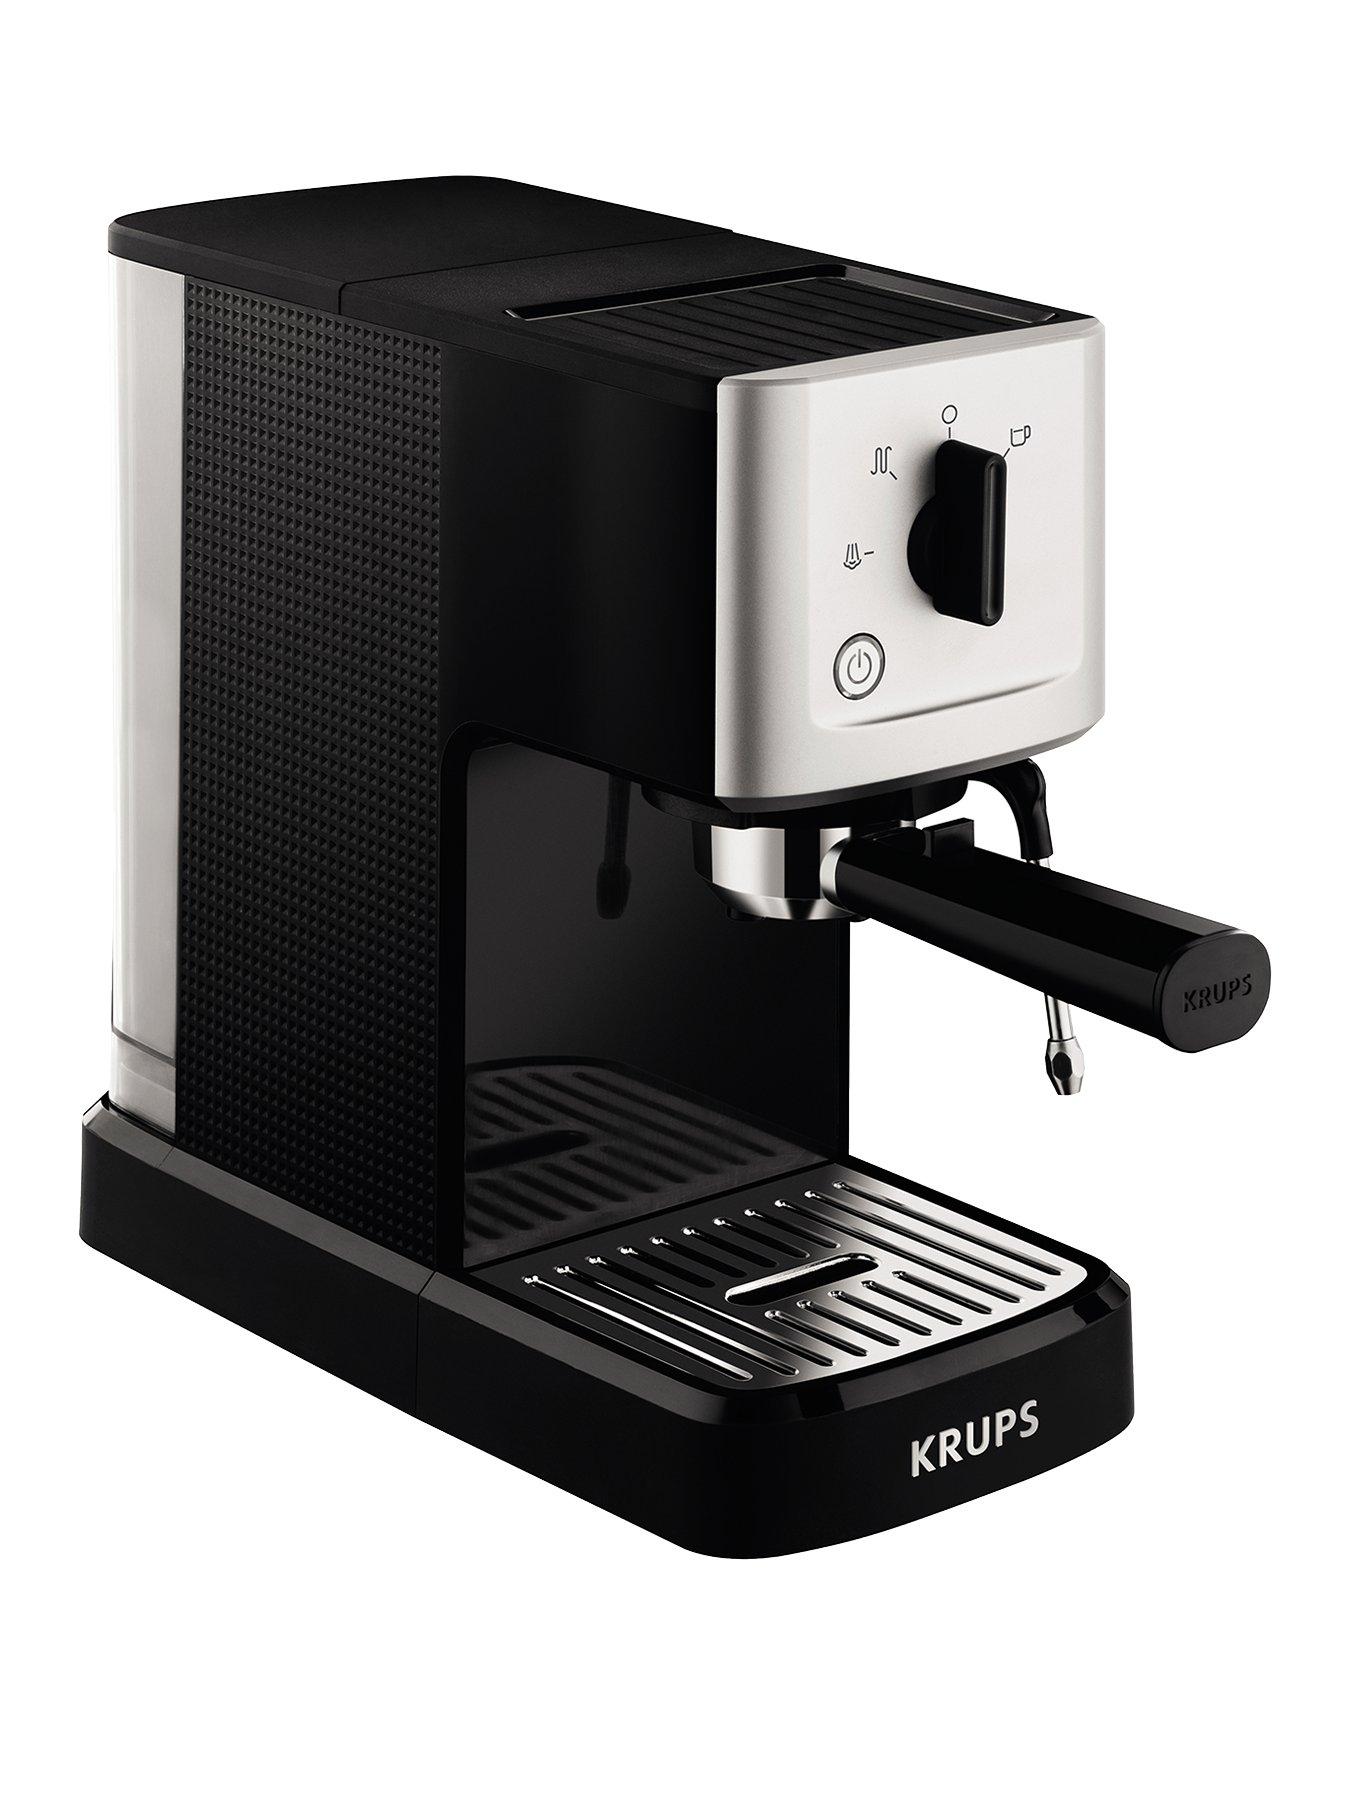 Krups Xp344040 Calvi Manual Espresso Machine – Black